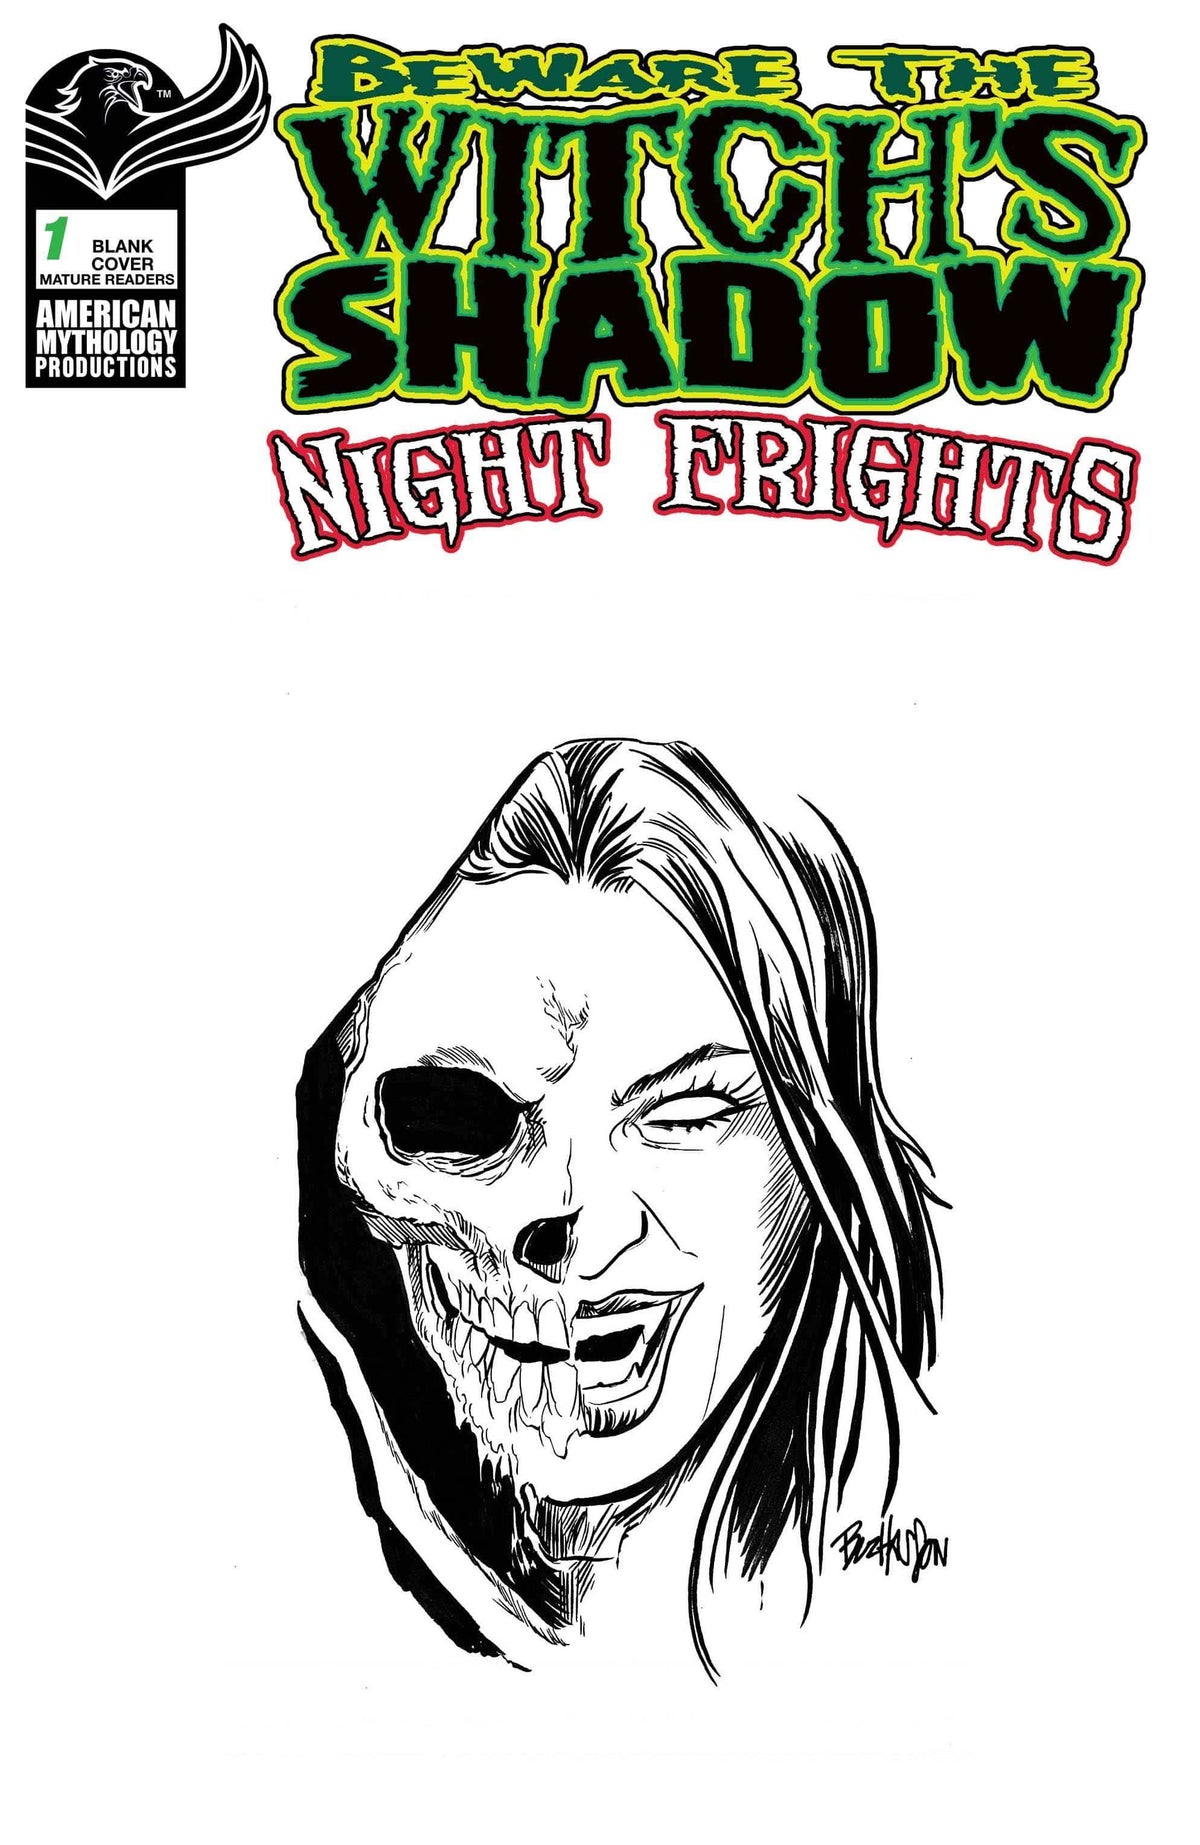 BEWARE THE WITCHS SHADOW NIGHT FRIGHTS #1 CVR ORIGINAL SKETC - Third Eye